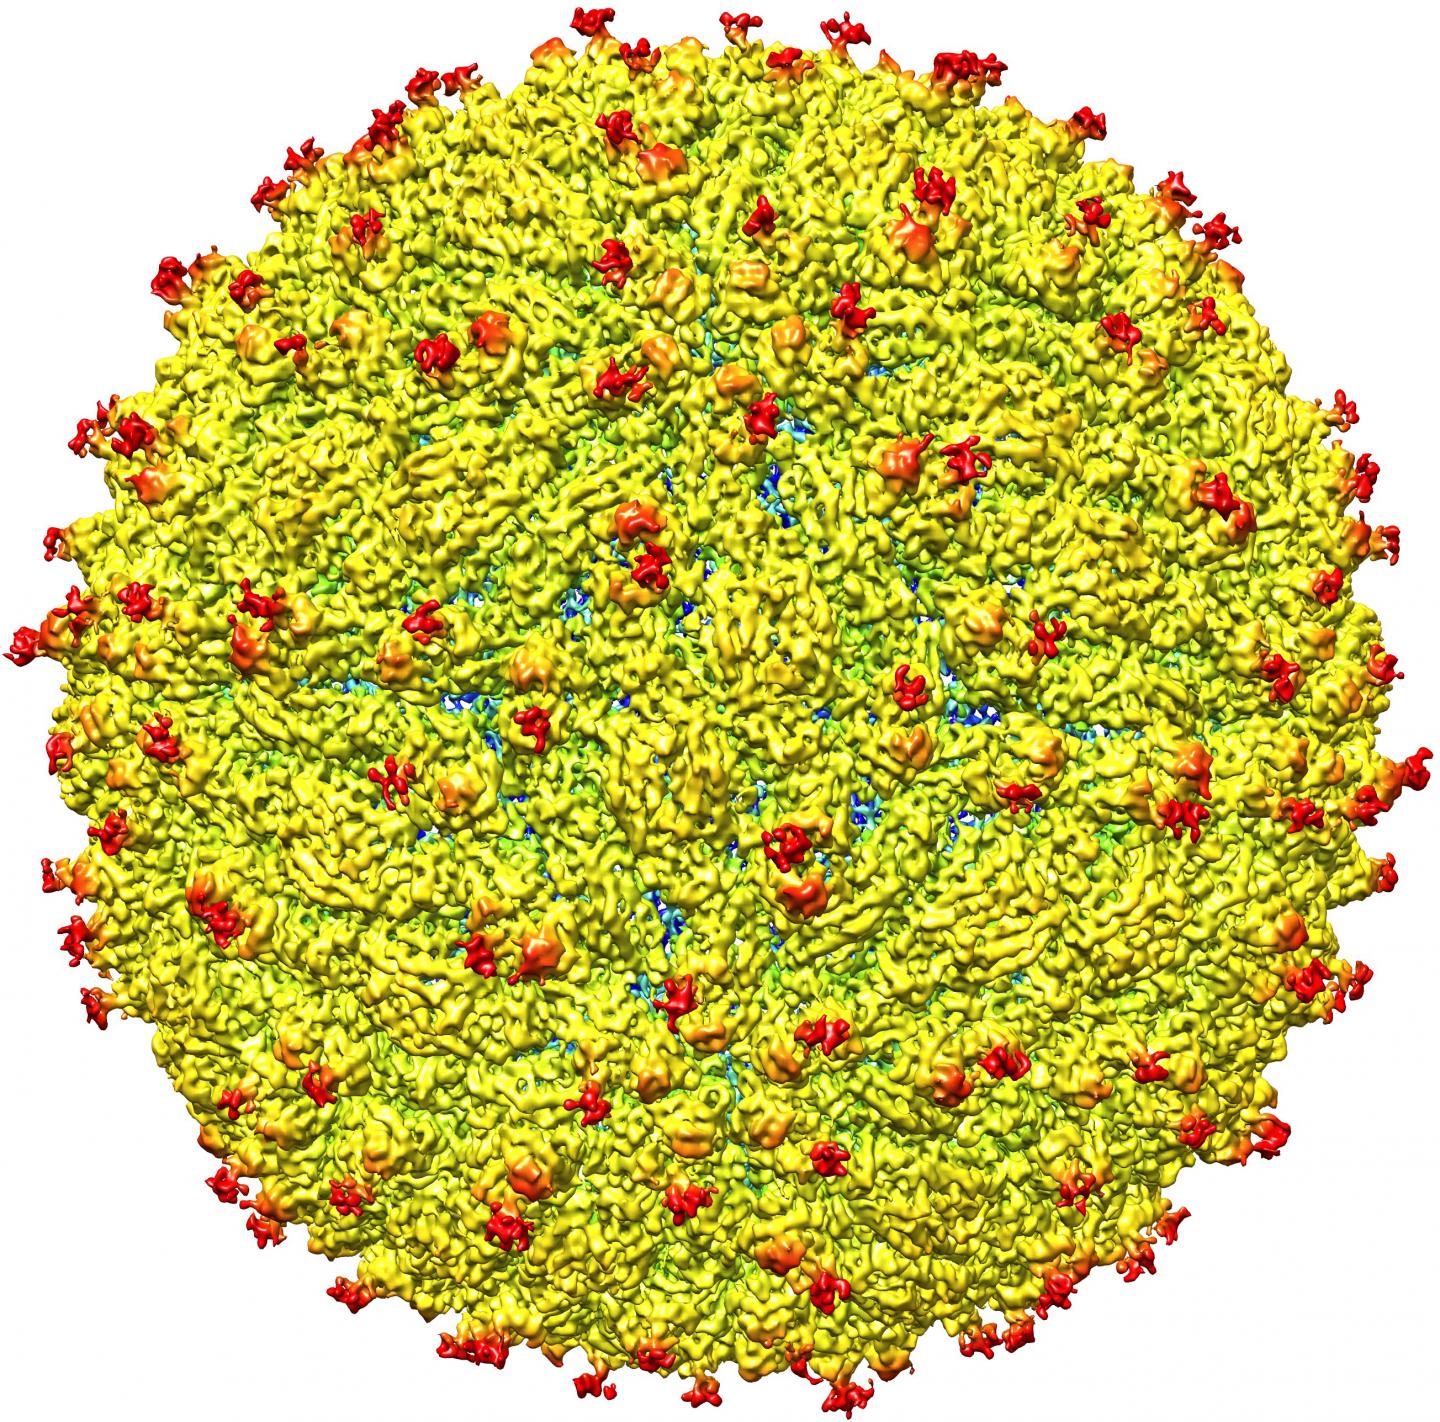 Structure of Zika Virus Revealed